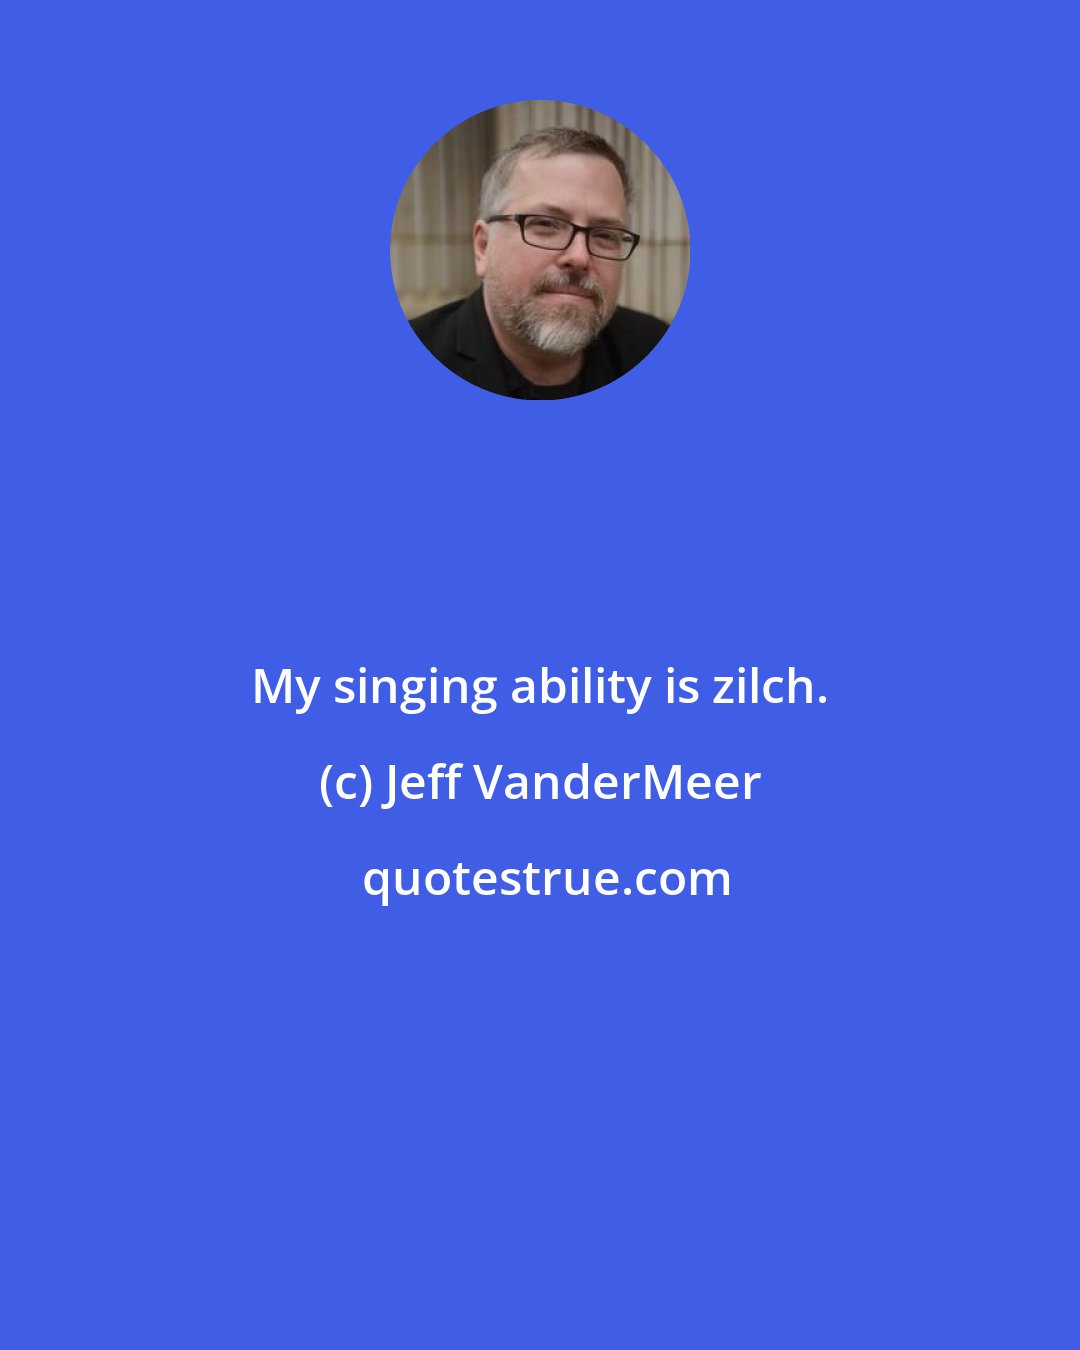 Jeff VanderMeer: My singing ability is zilch.